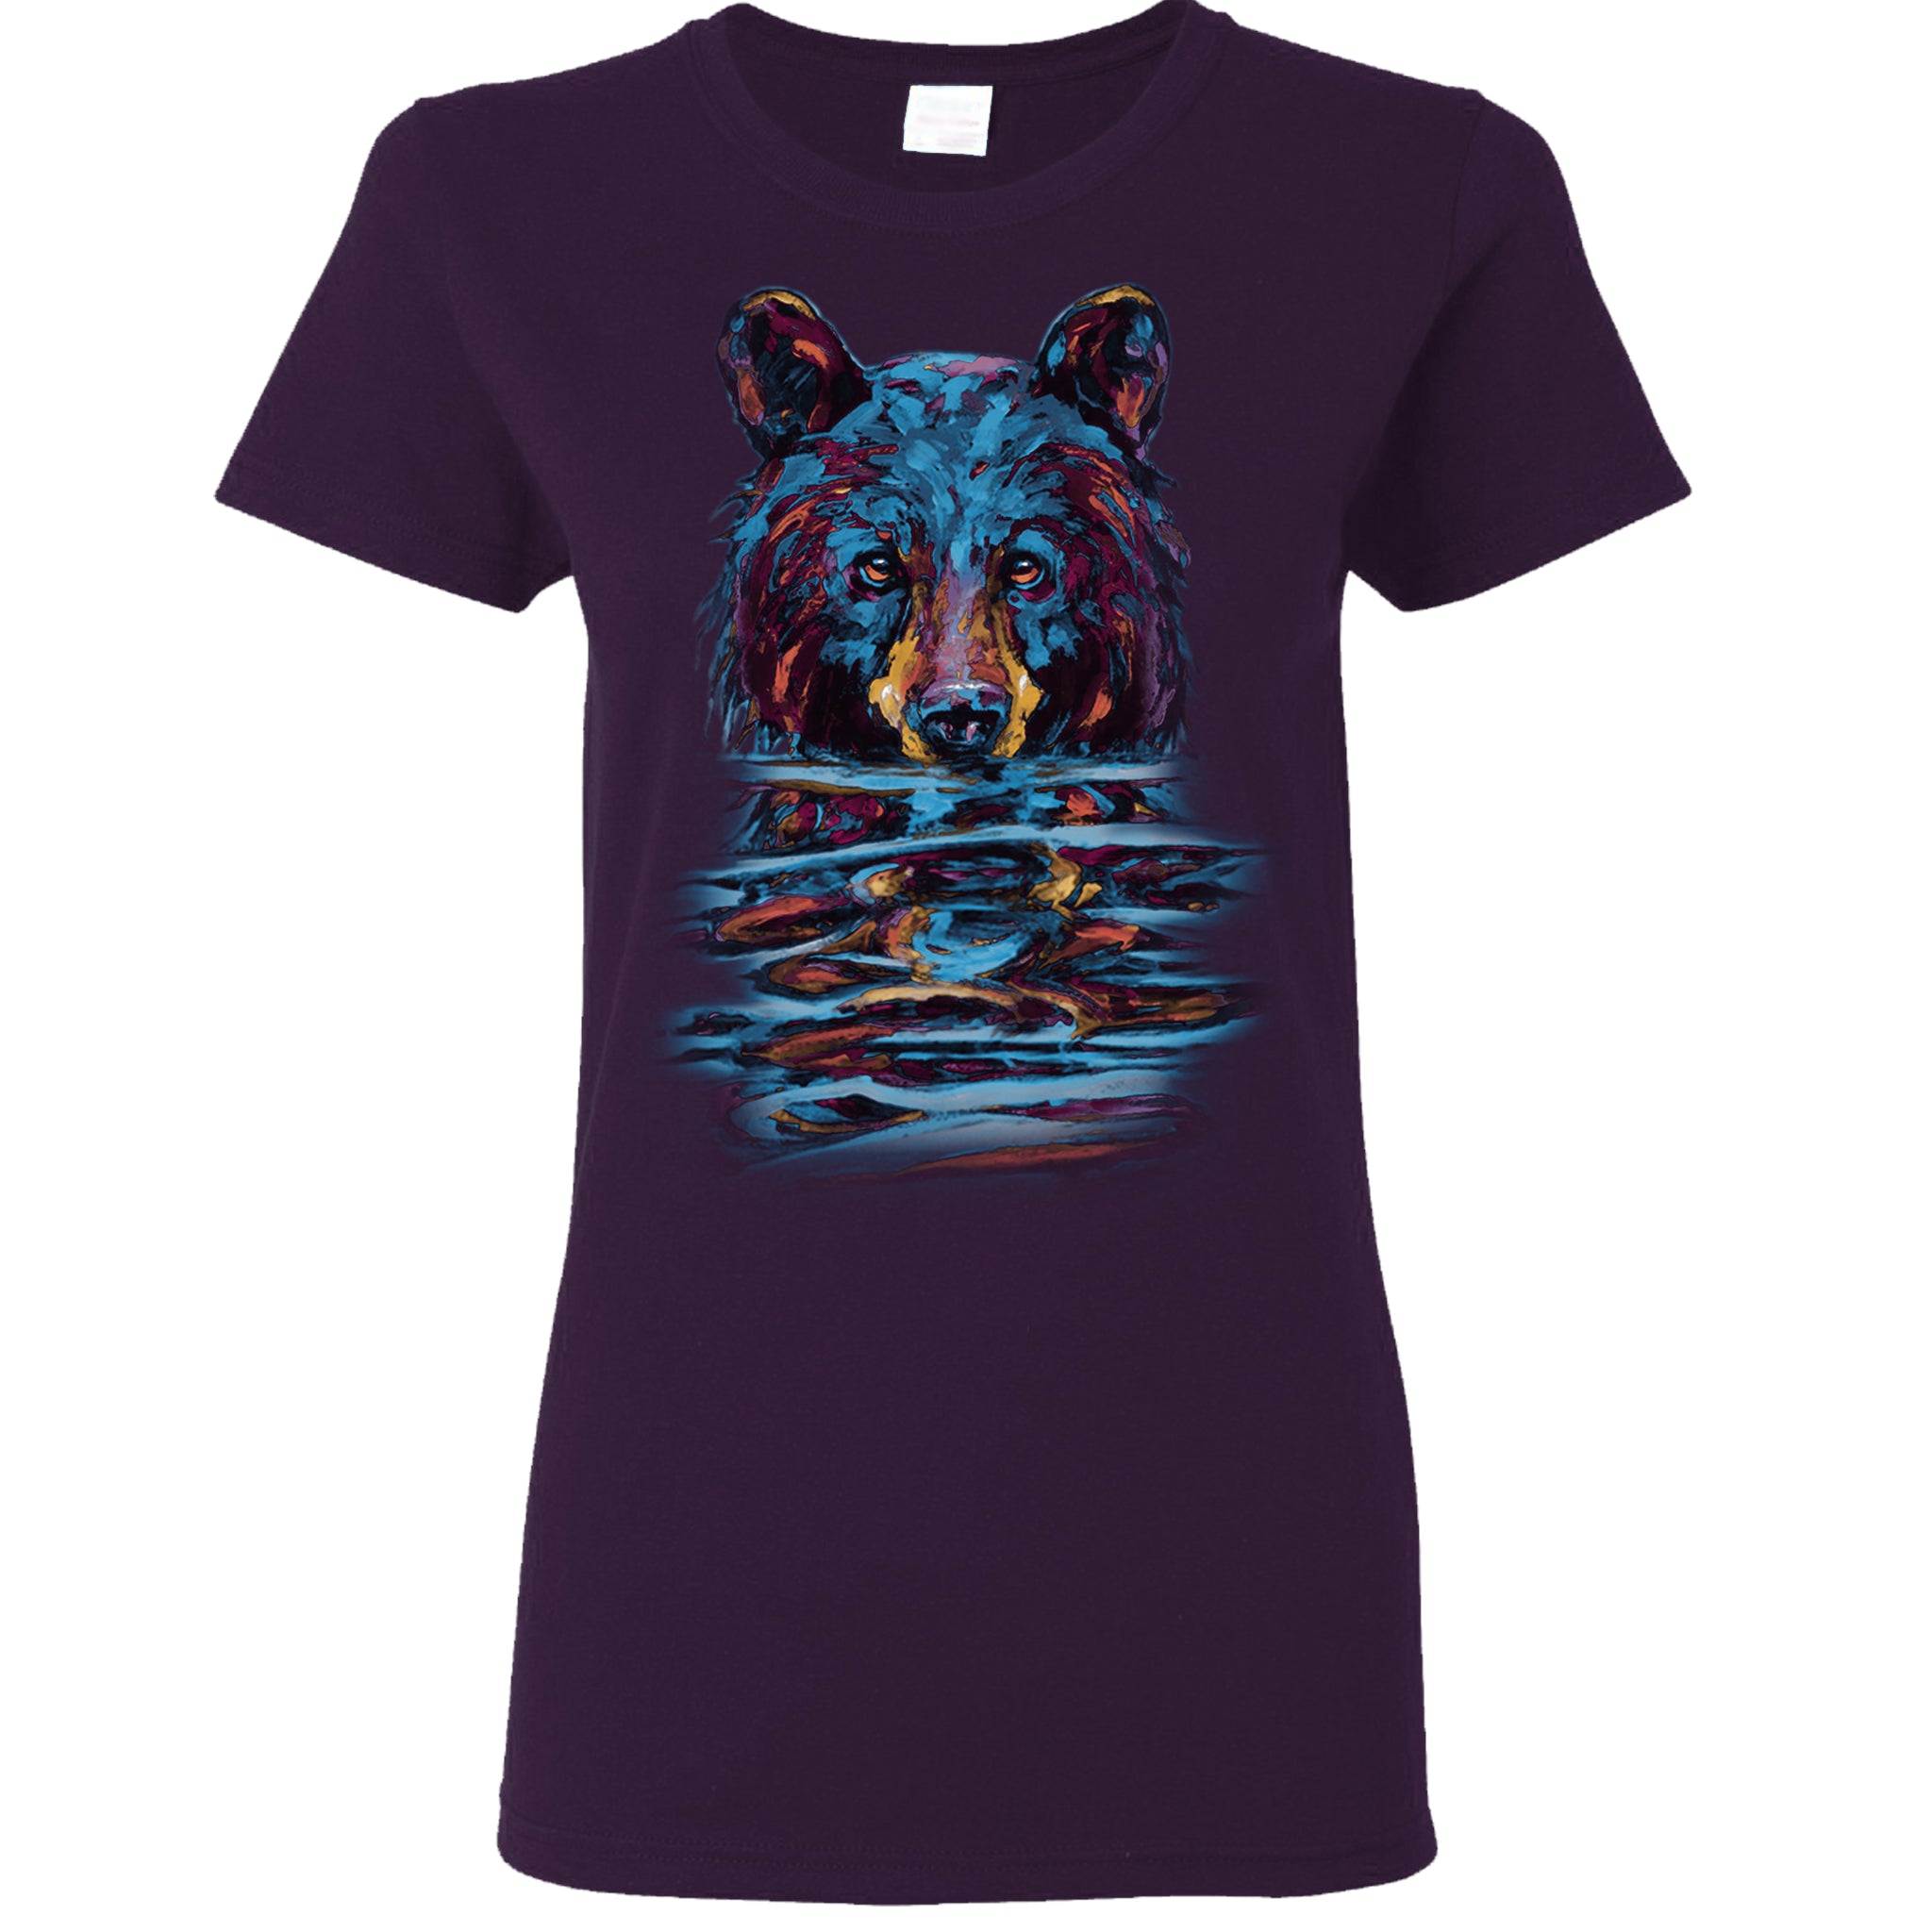 Very Wet Bear T-shirt -blackberry t-shirt with black bear art by Canadian nature artist Kari Lehr